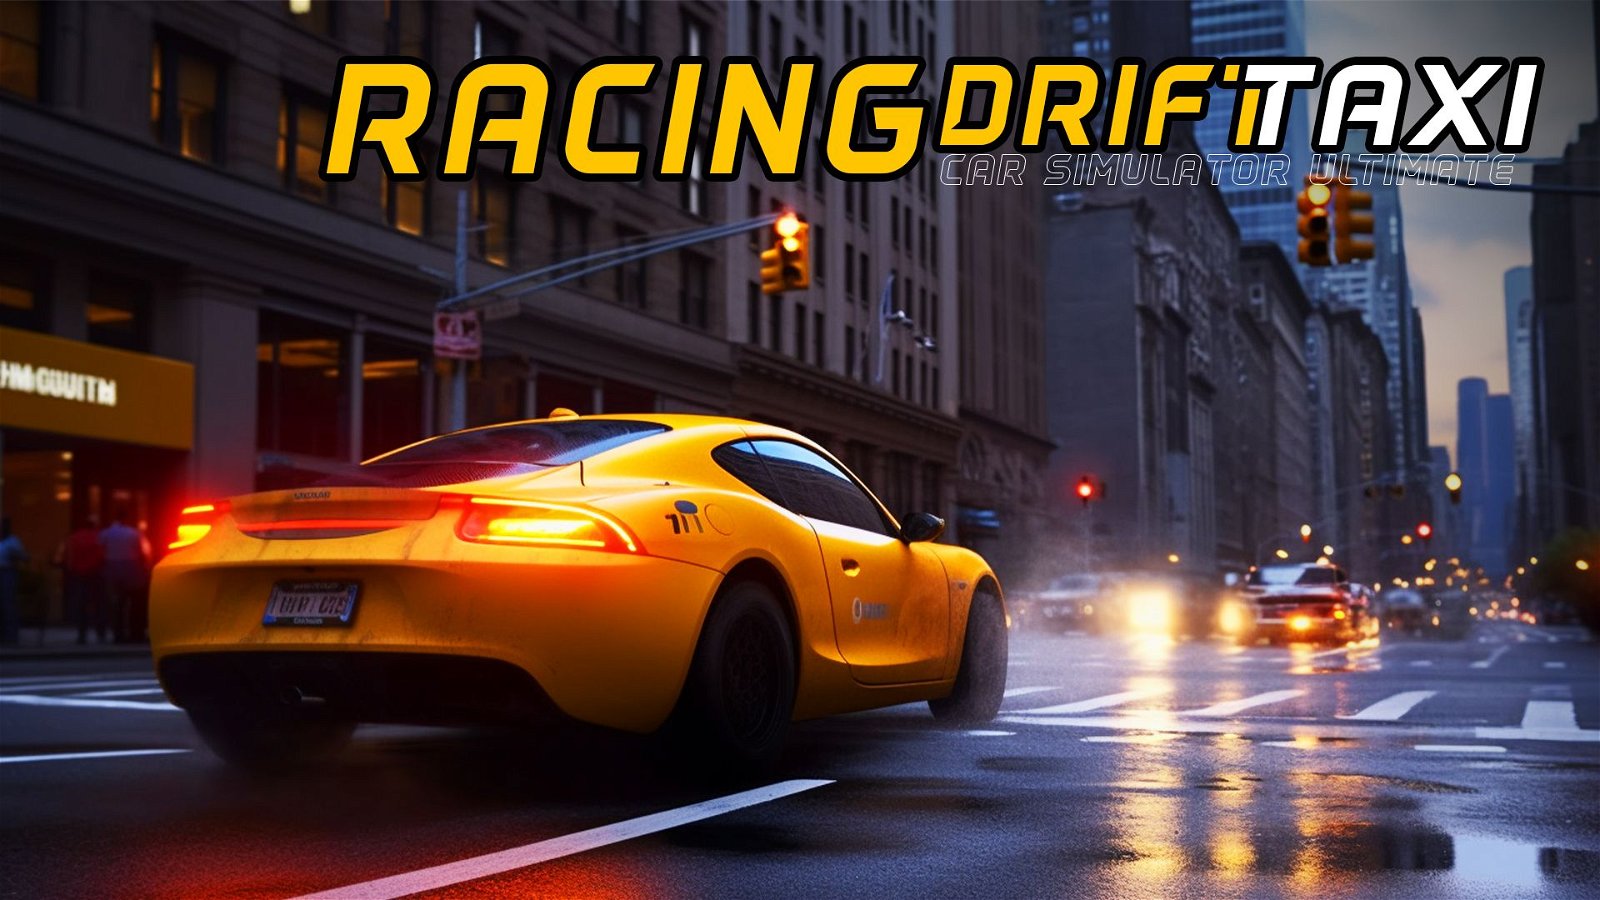 Image of Racing Drift Taxi Car Simulator Ultimate